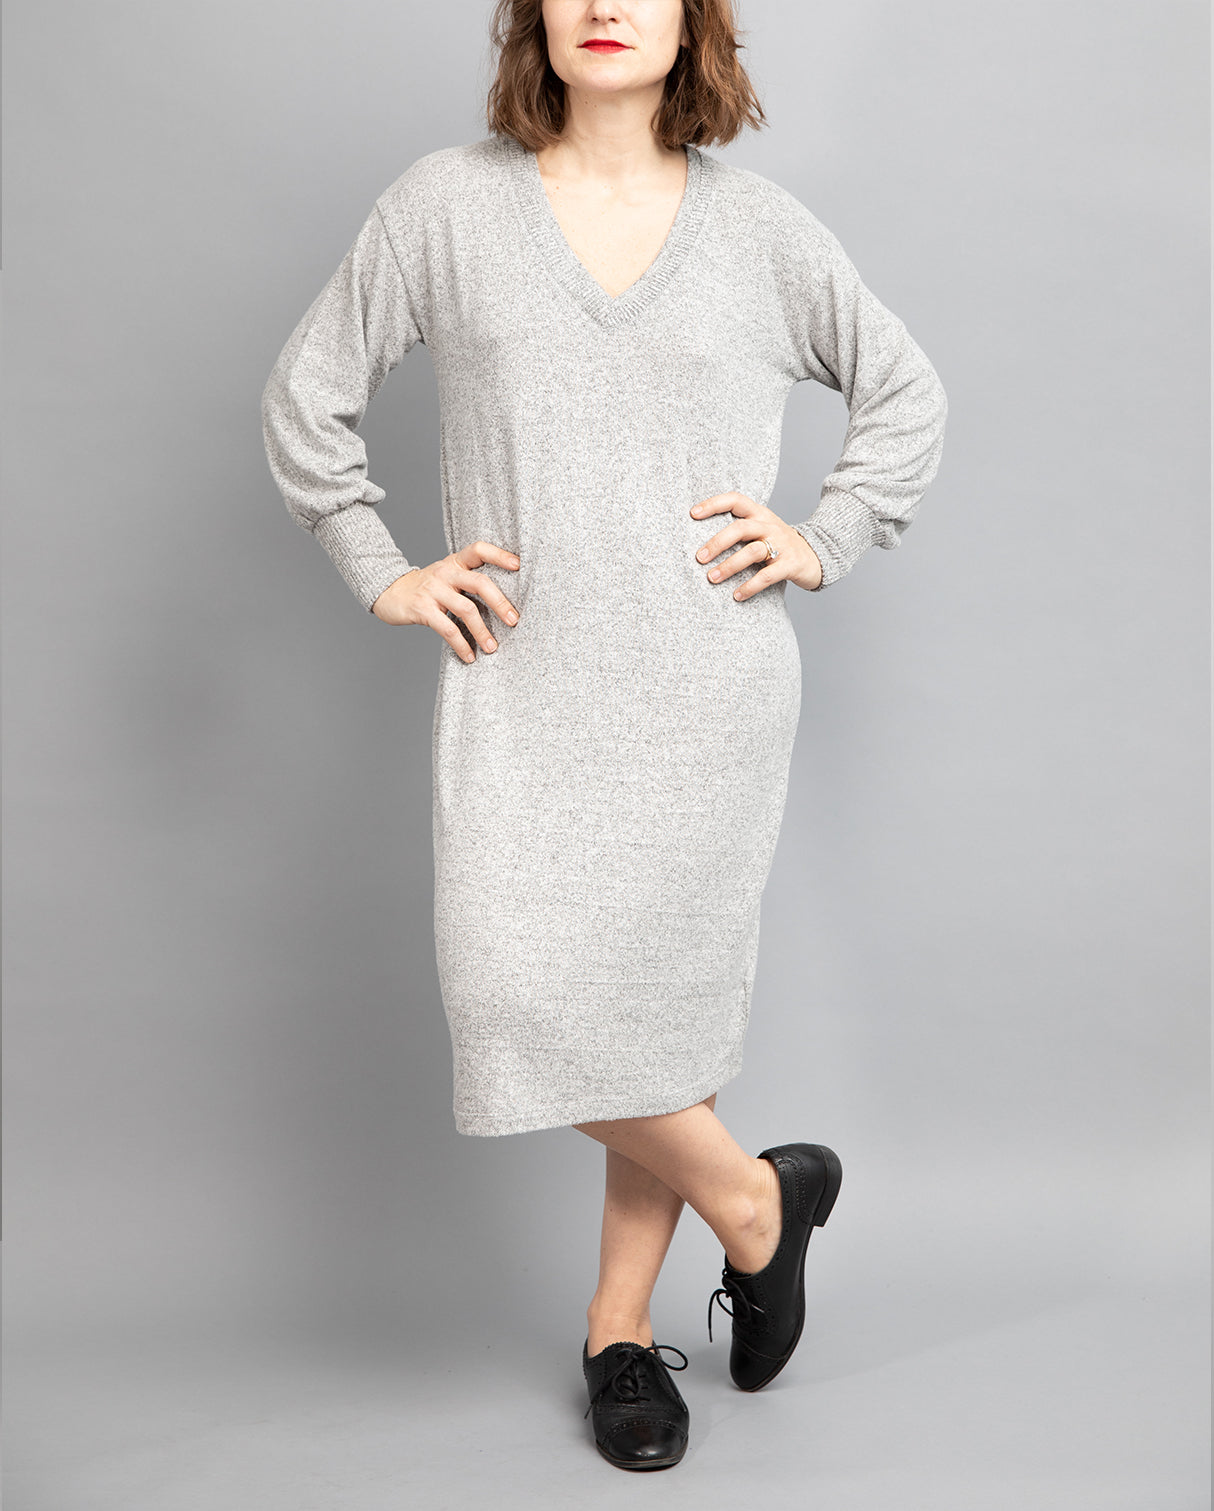  Ultra Soft Sweater Dress